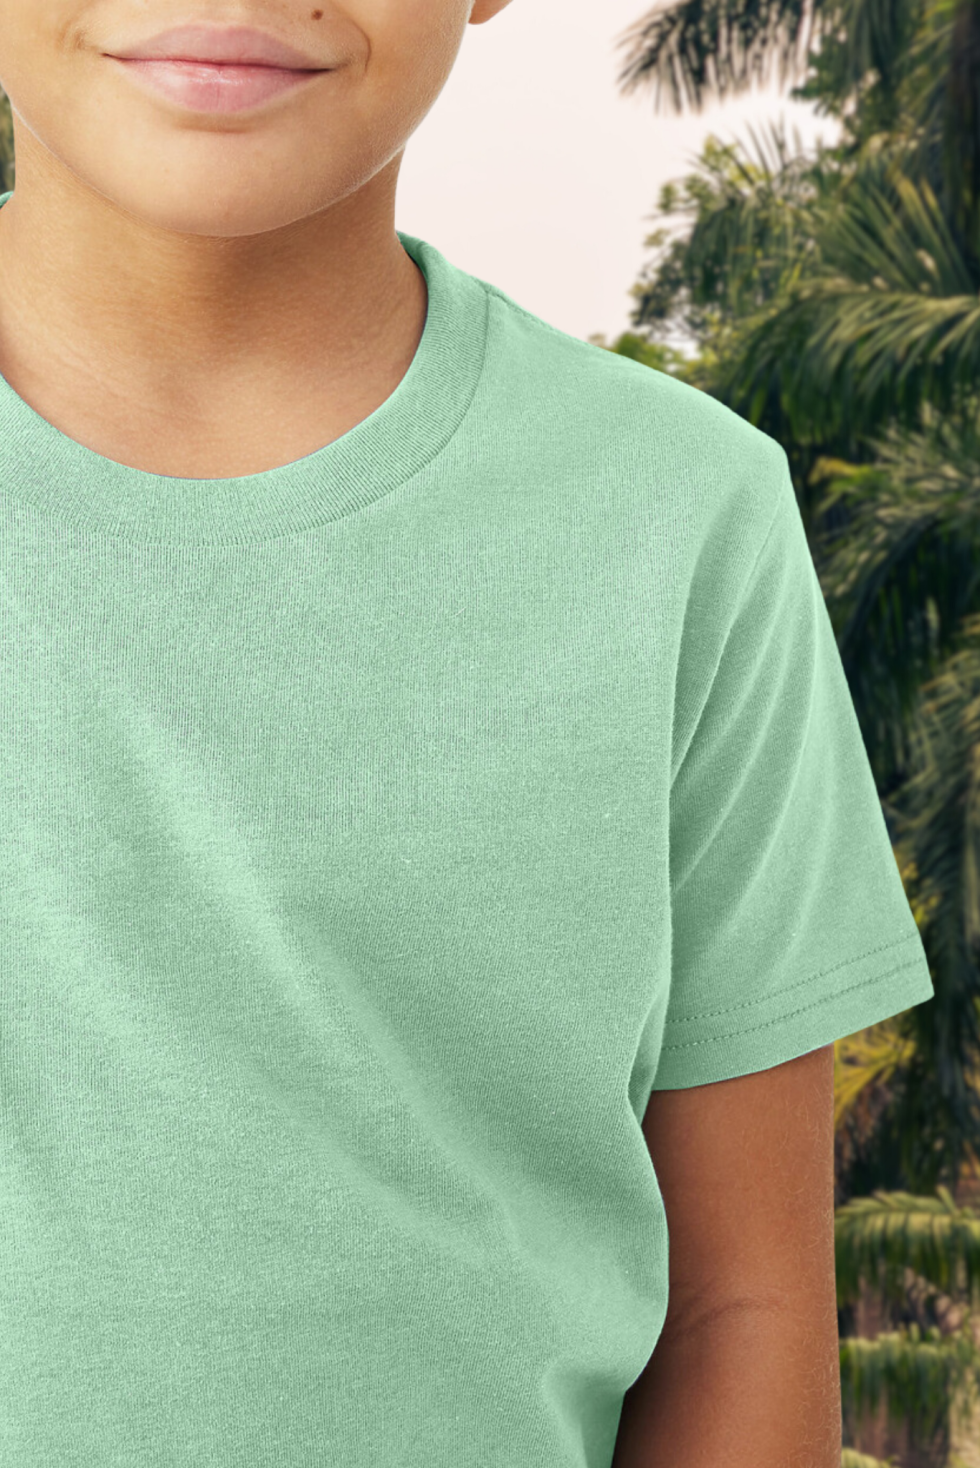 Aquamarine 4 - Crystal Infused Clothing - Apparel - T-Shirts